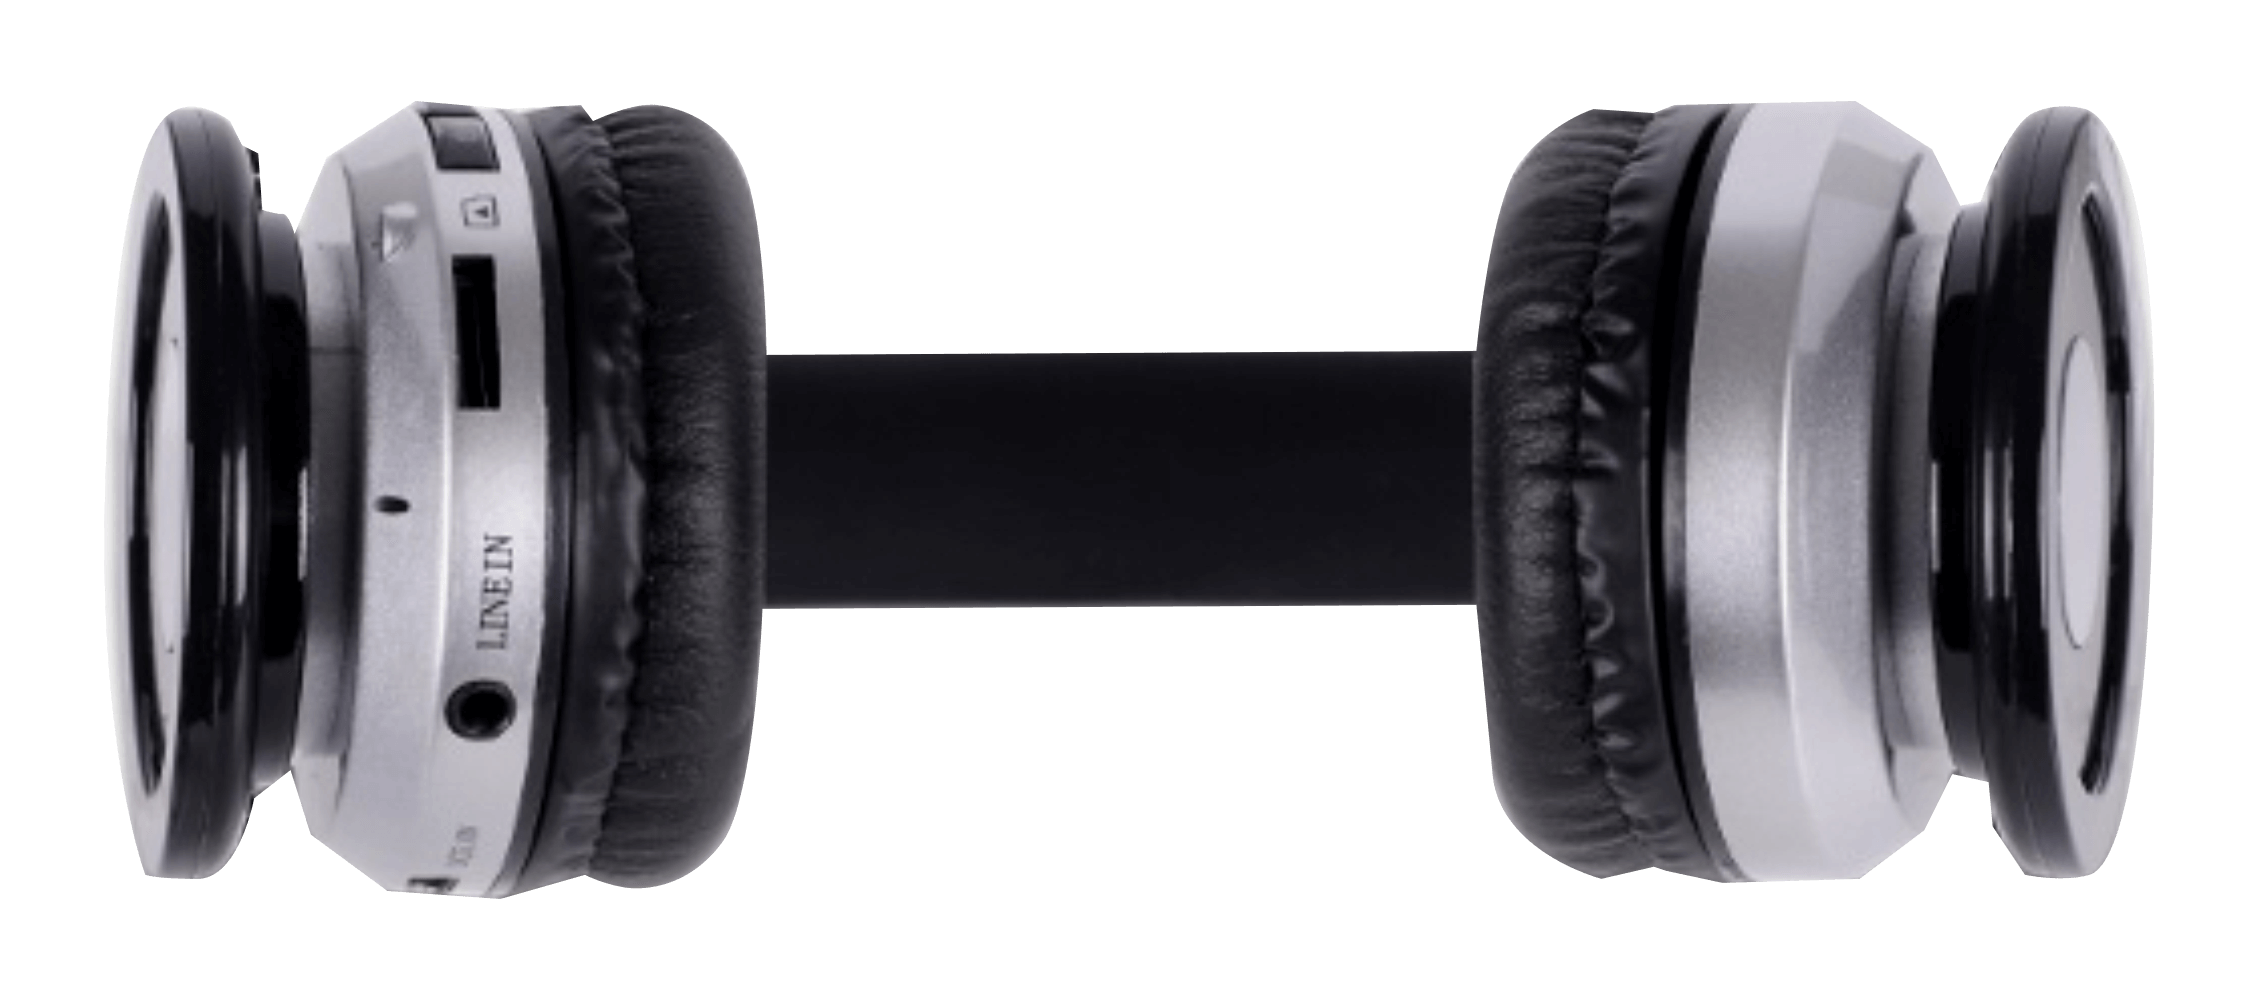 Sony Xperia XZ (F8331) bluetooth fejhallgató Rebeltec Crystal fekete